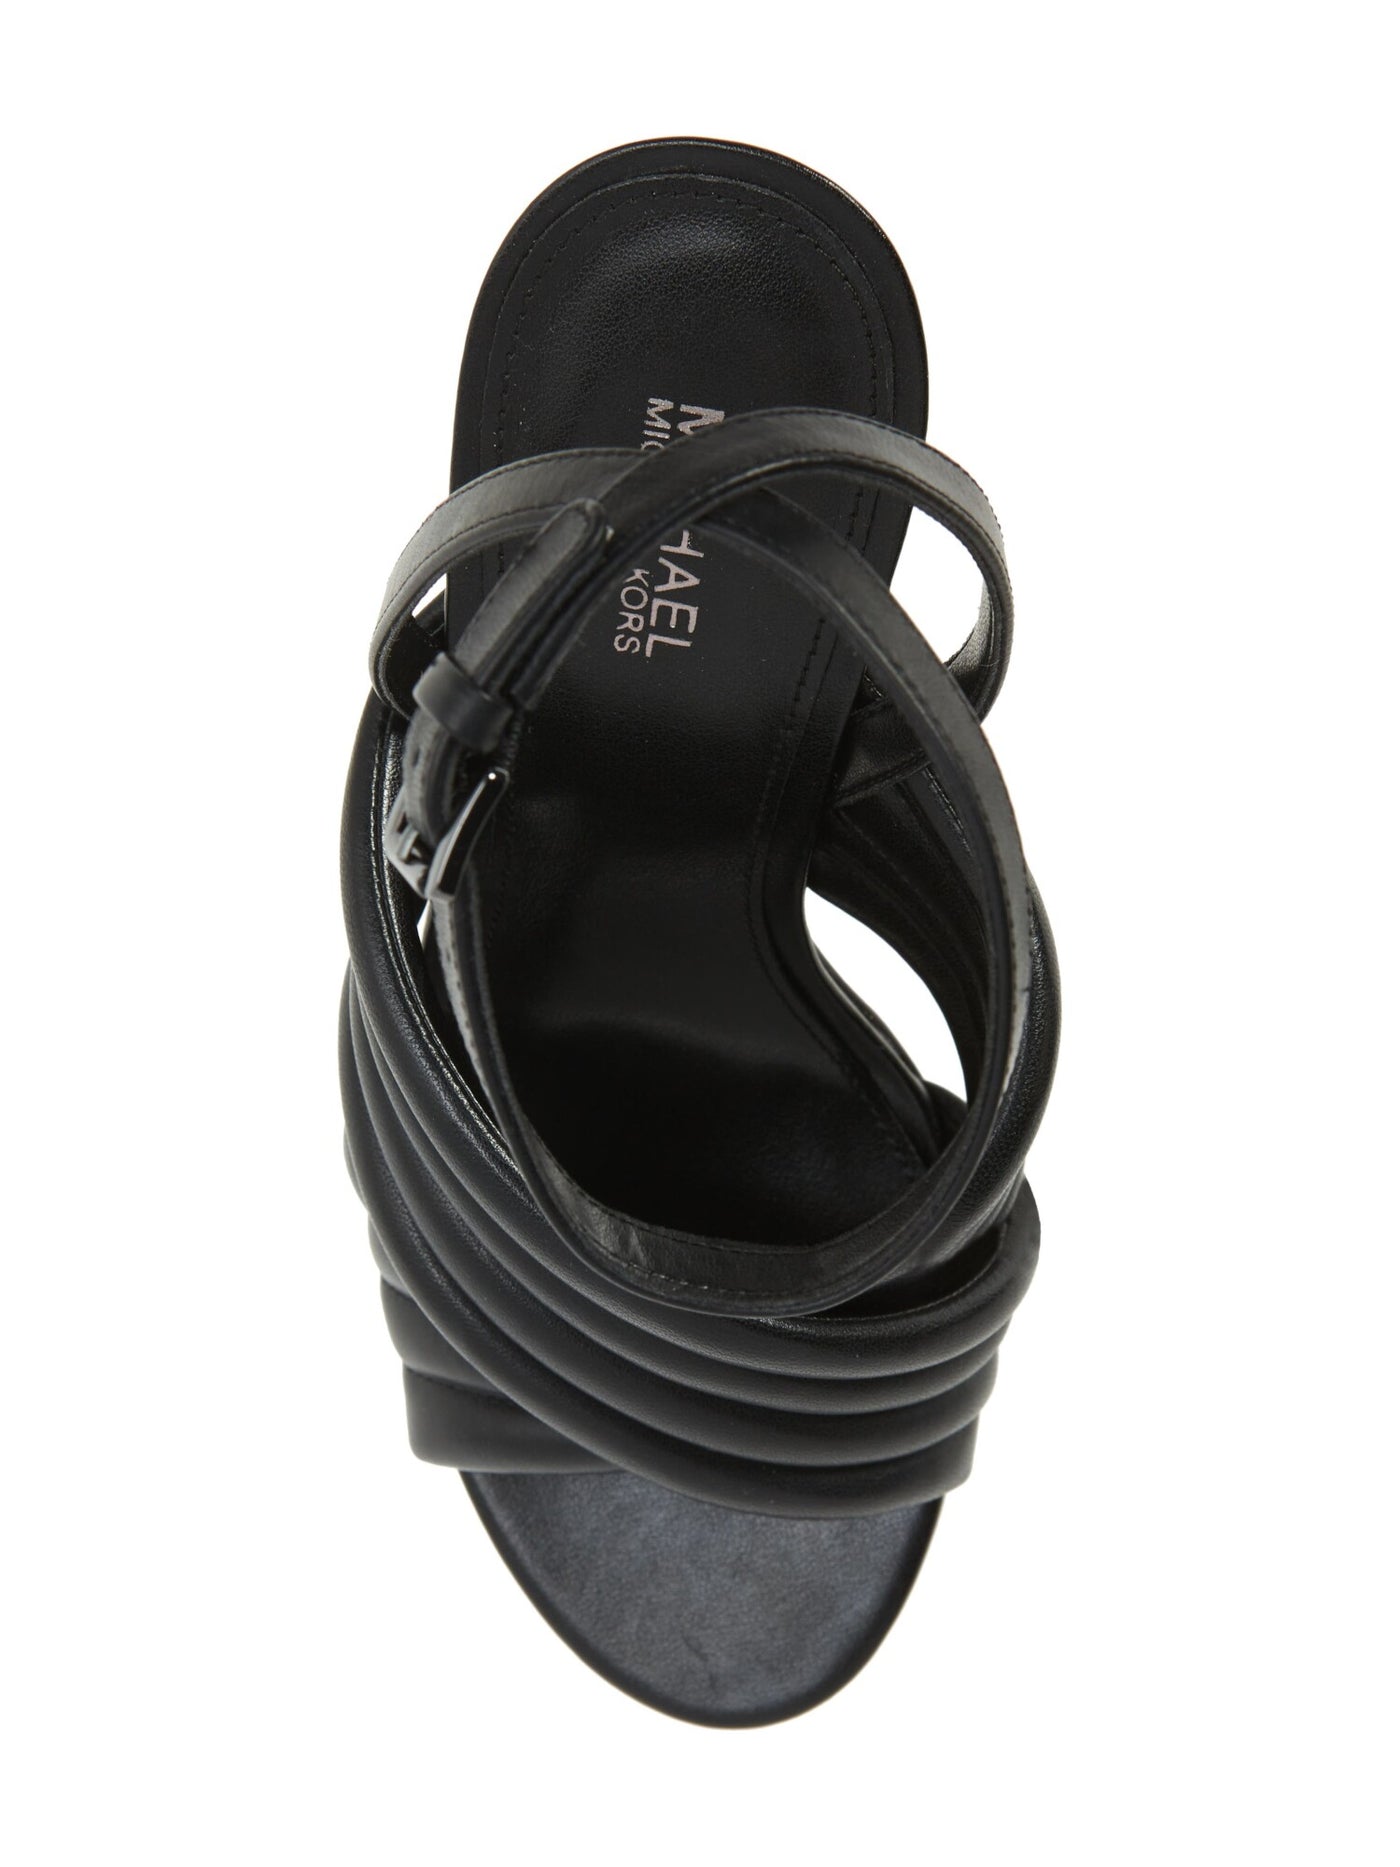 MICHAEL KORS Womens Black Puffy Crisscross Ankle Strap Adjustable Rocye Round Toe Stiletto Buckle Leather Dress Sandals Shoes 6 M